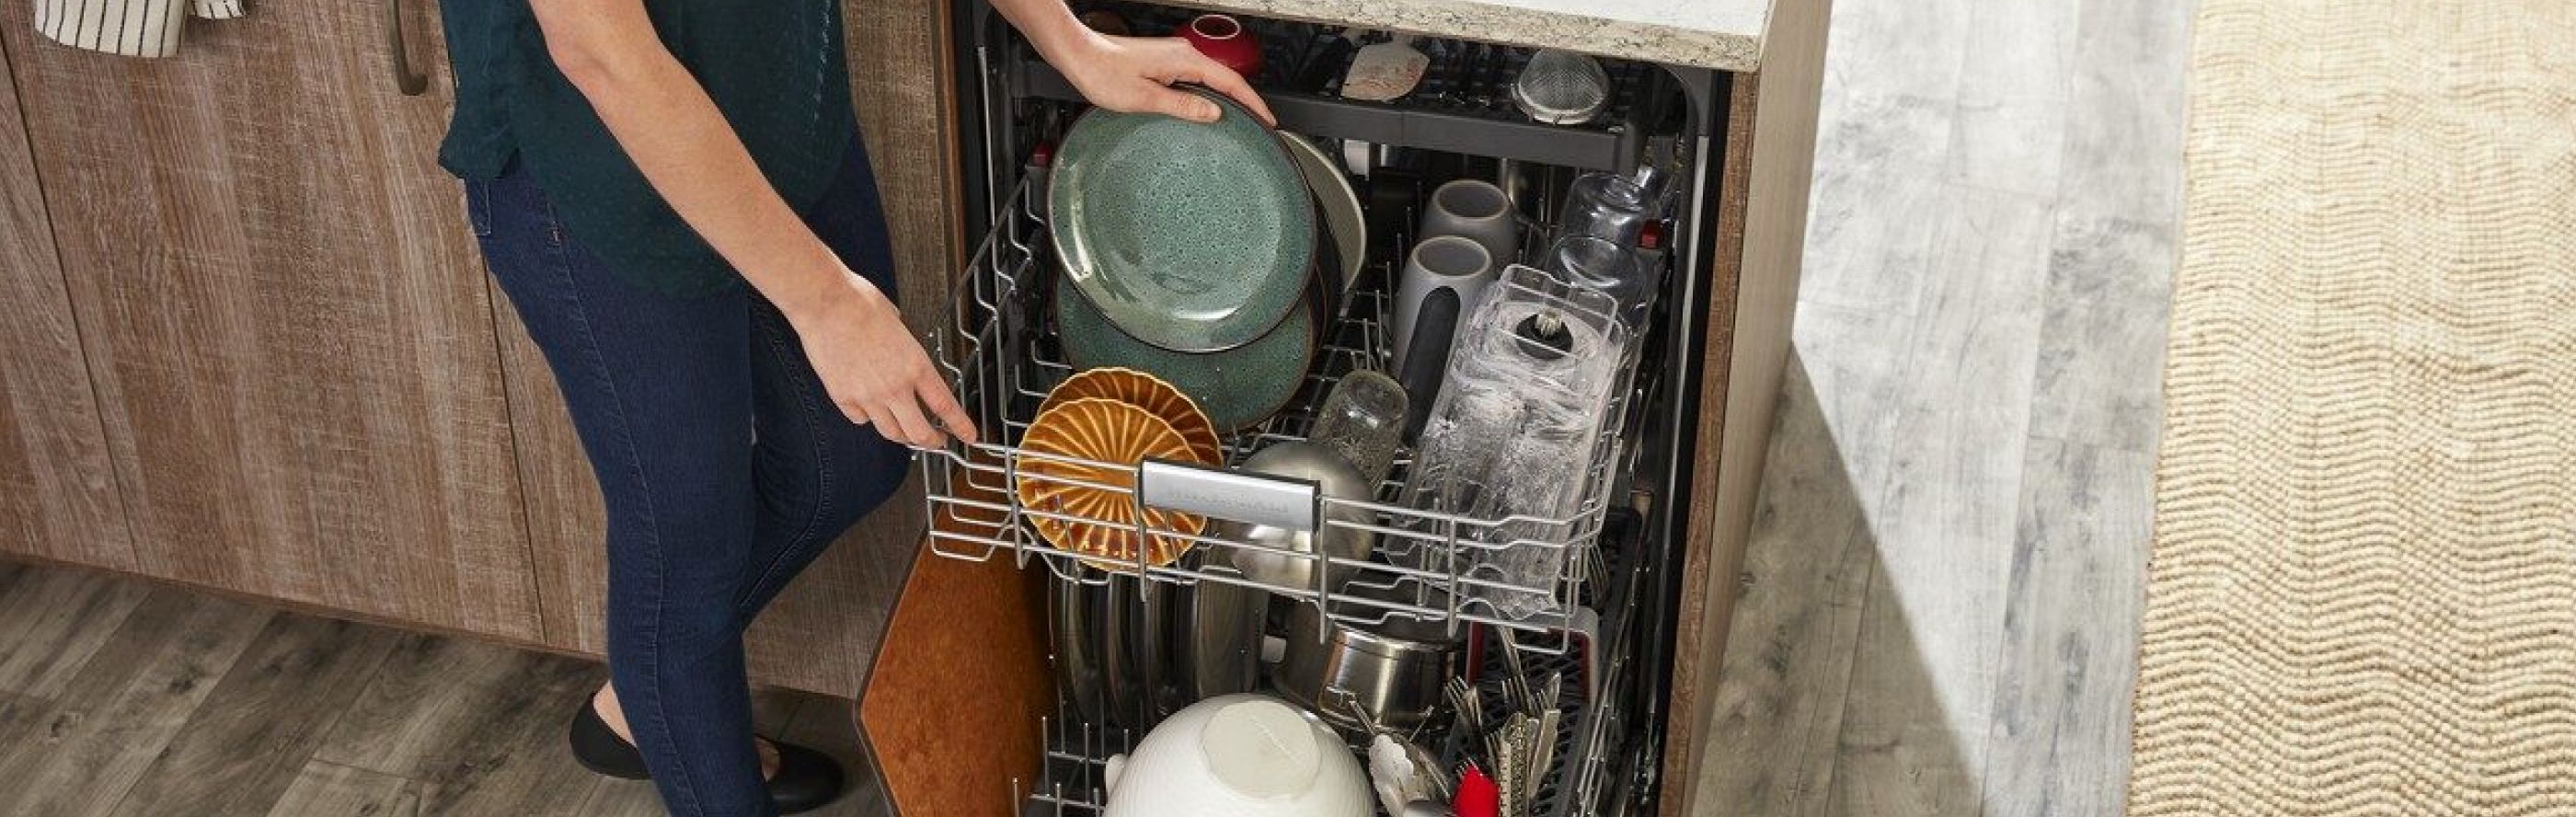 Woman loading dishes into dishwasher